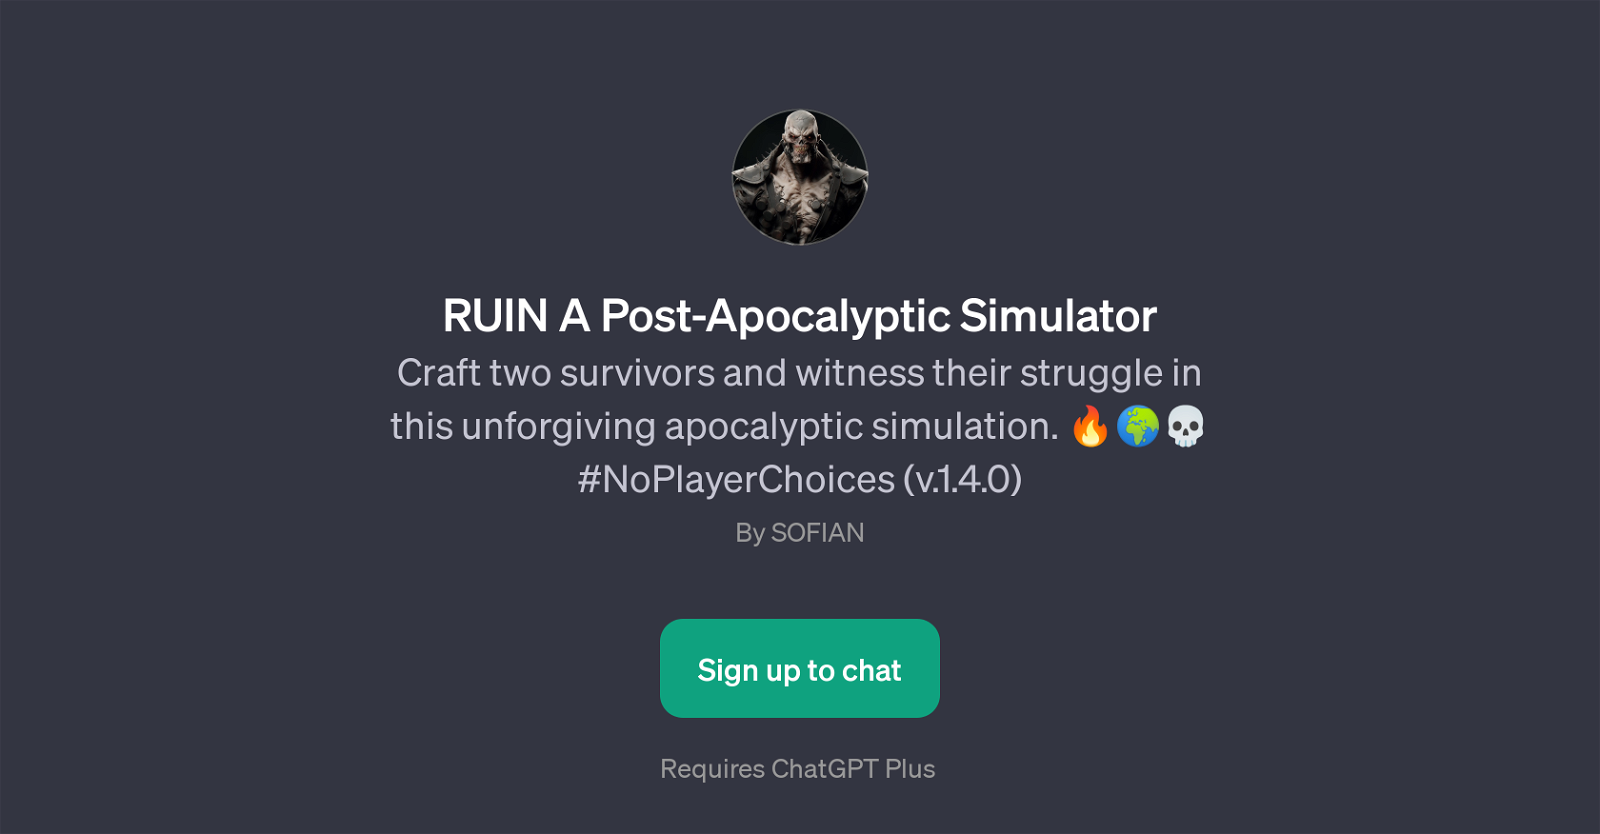 RUIN A Post-Apocalyptic Simulator website